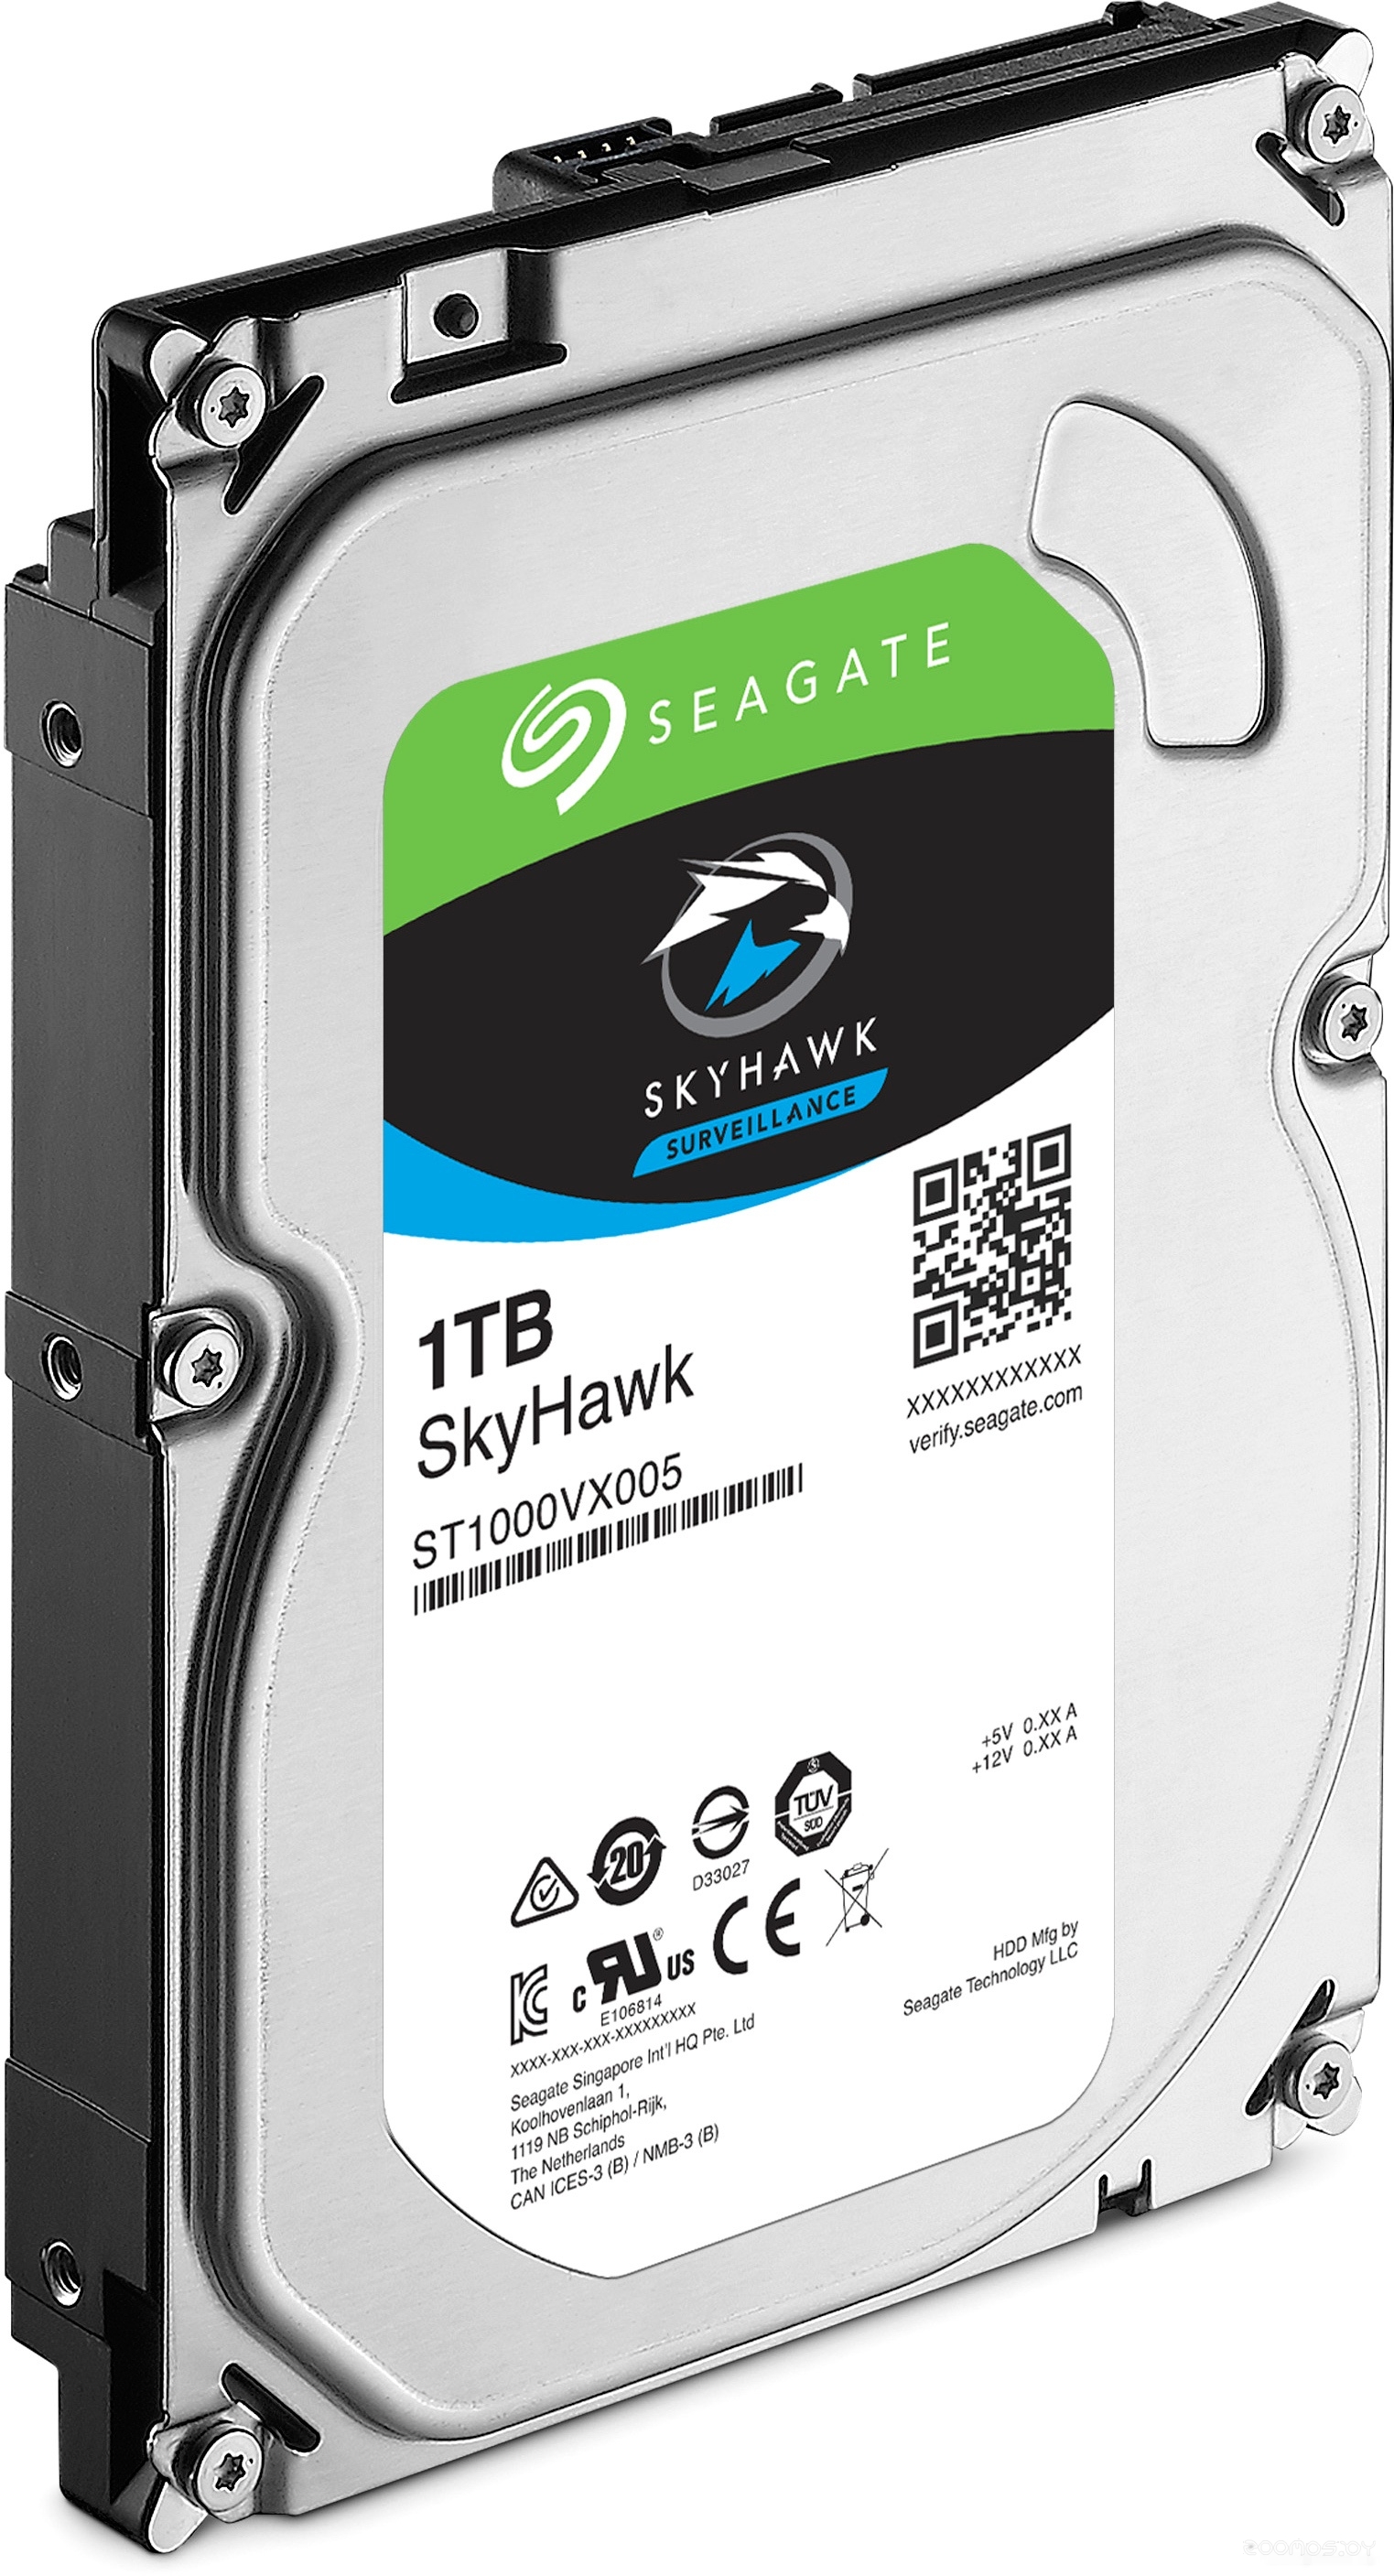   Seagate Skyhawk 1TB [ST1000VX005]     